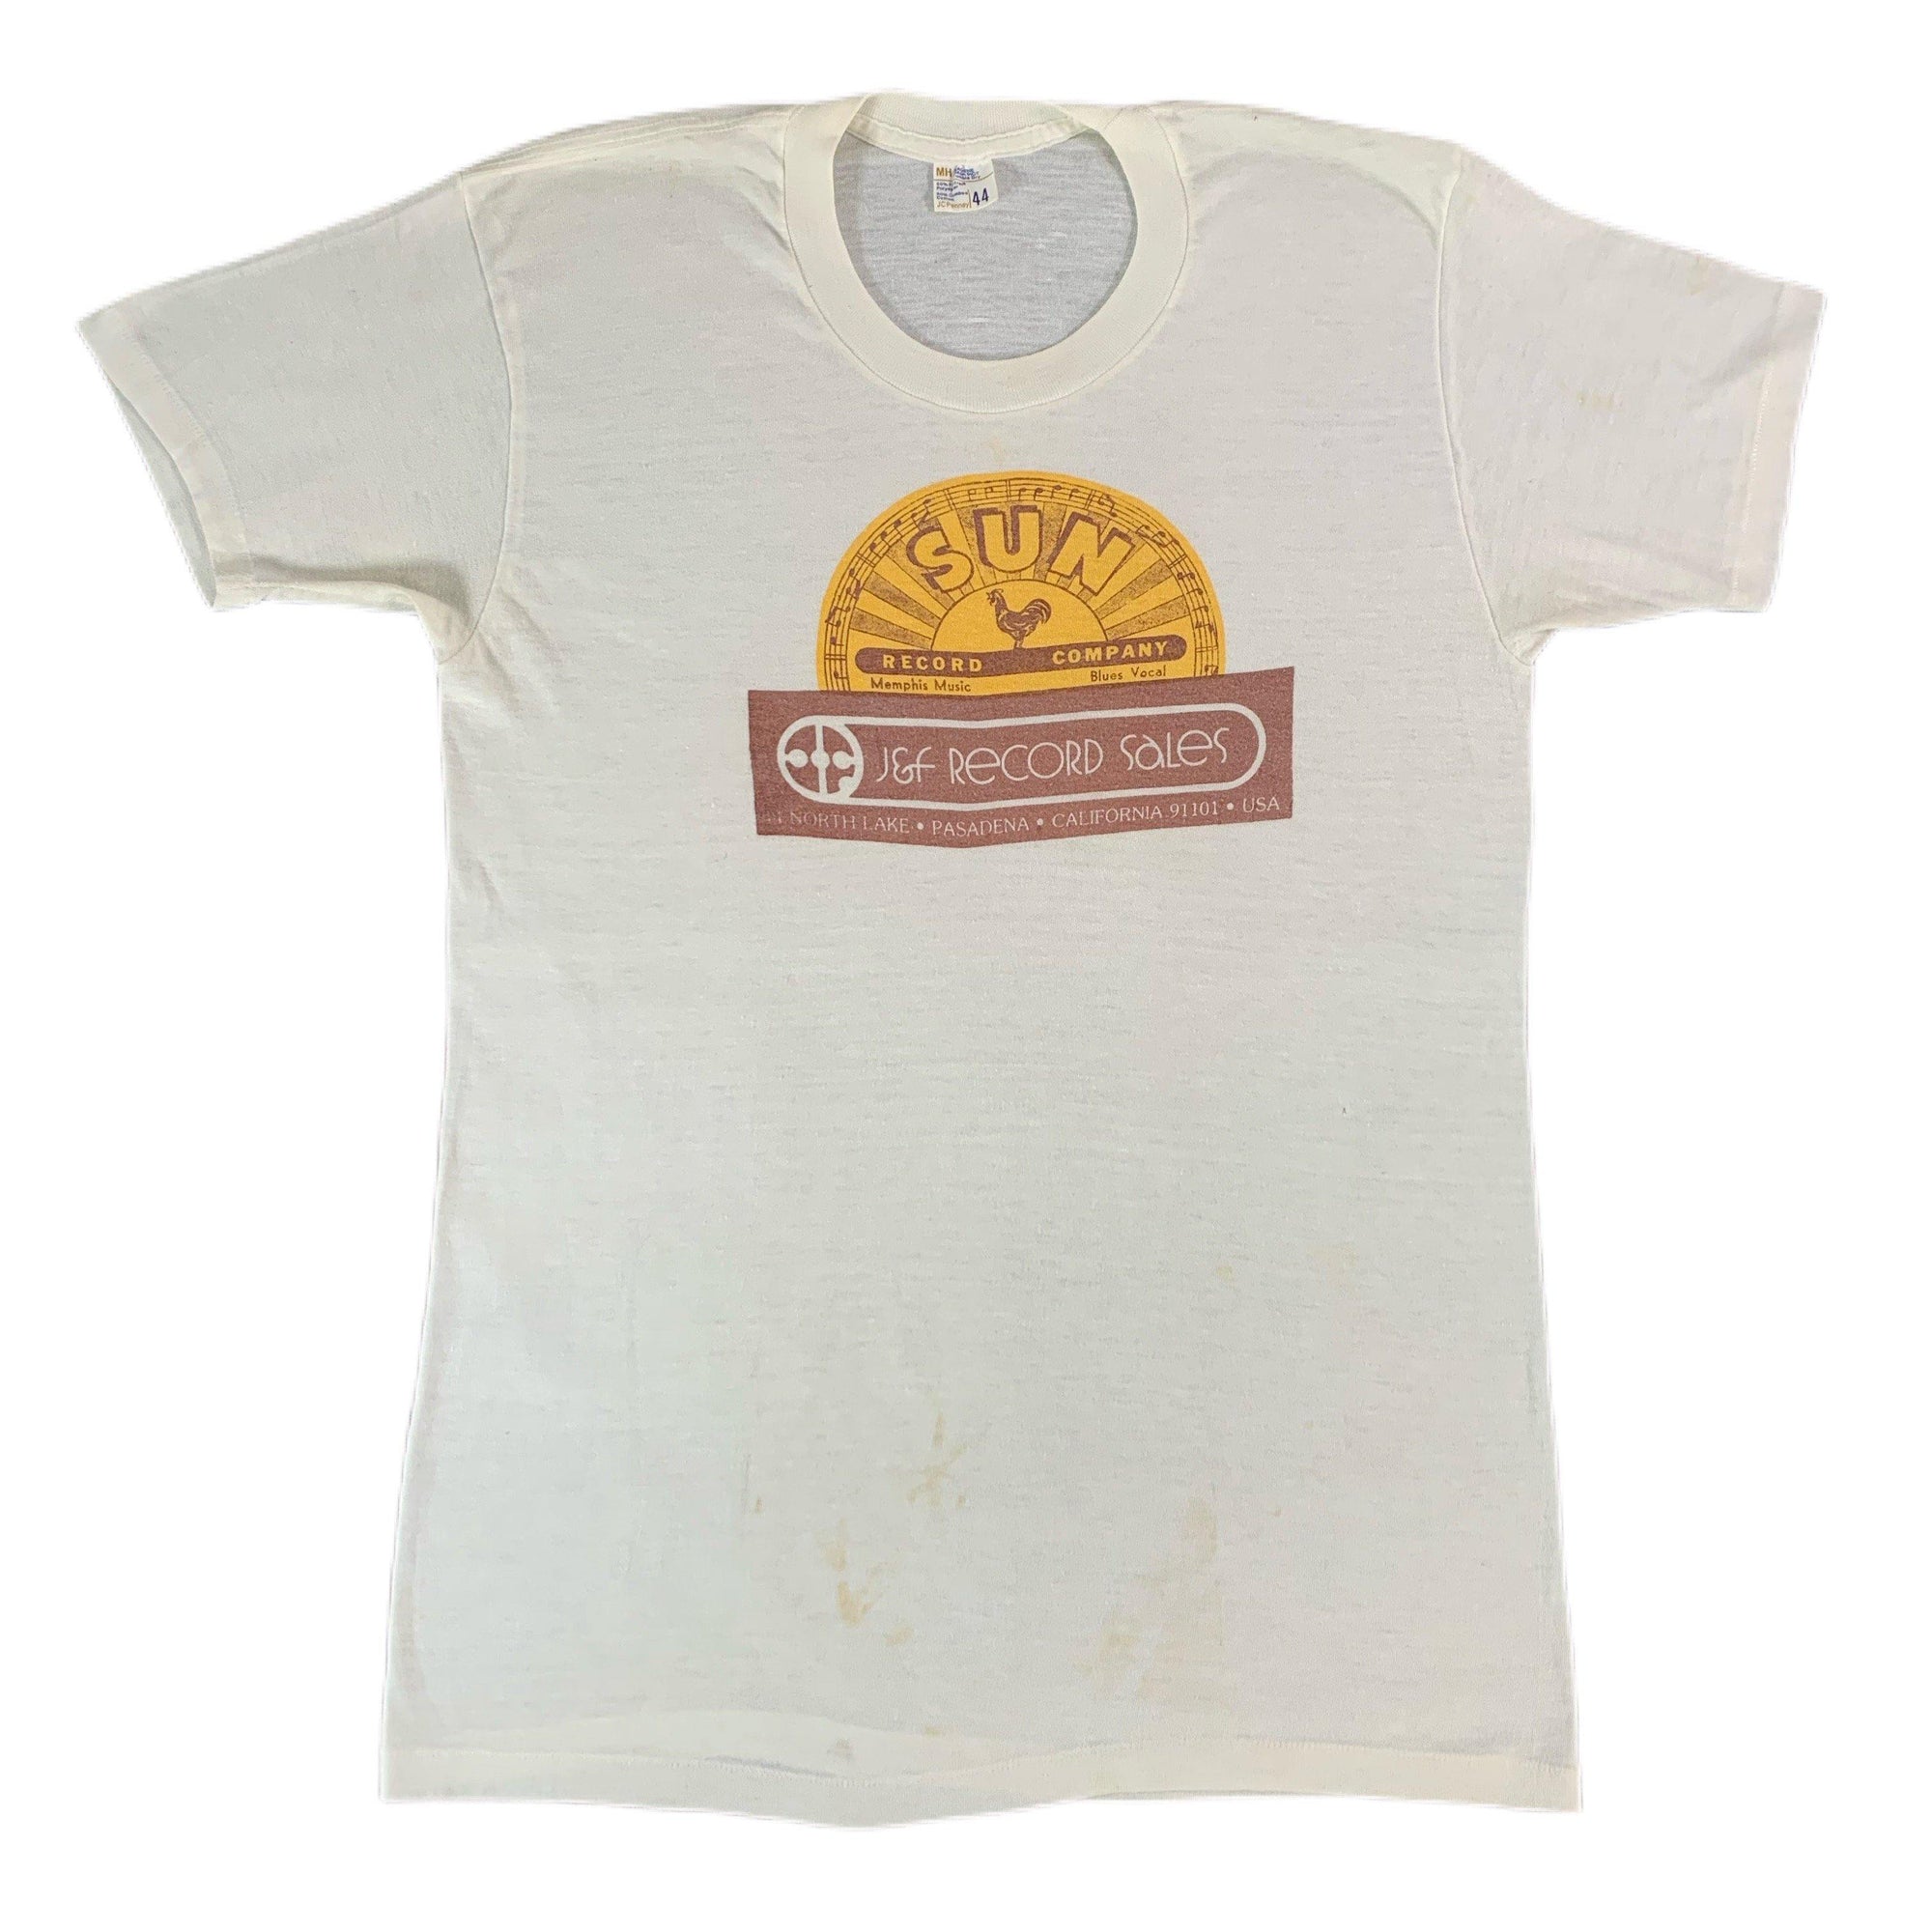 Vintage Sun Records "J&F Record Sales" T-Shirt - jointcustodydc